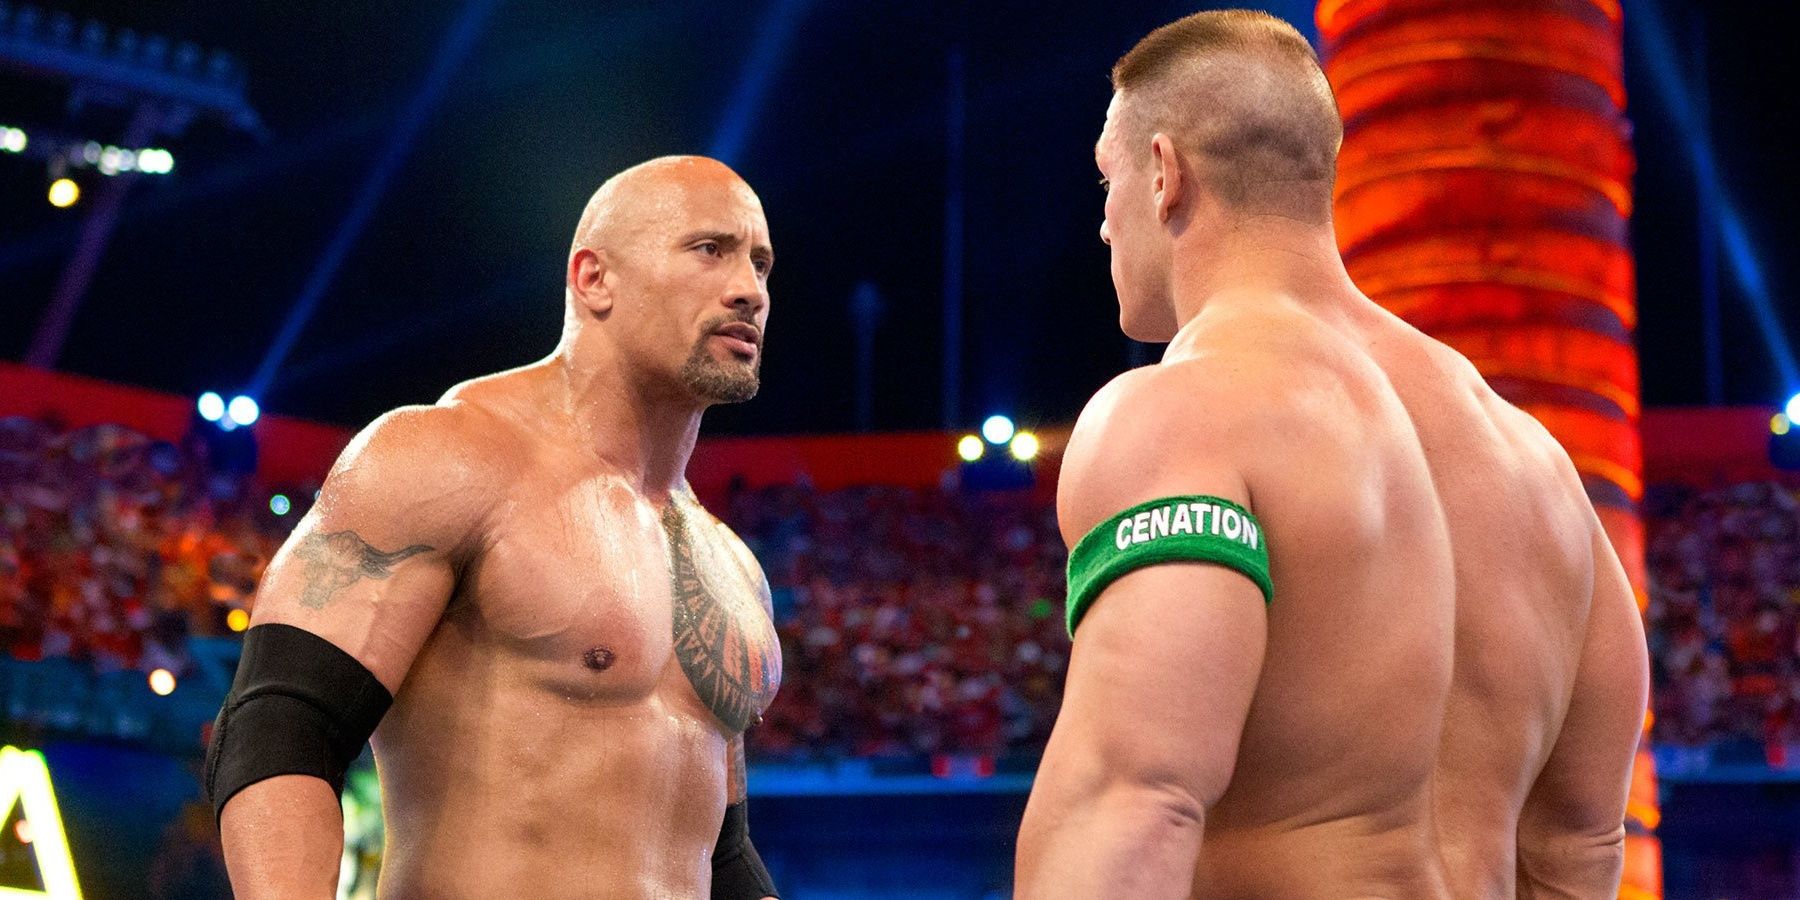 The Rock vs. John Cena From Wrestlemania 28